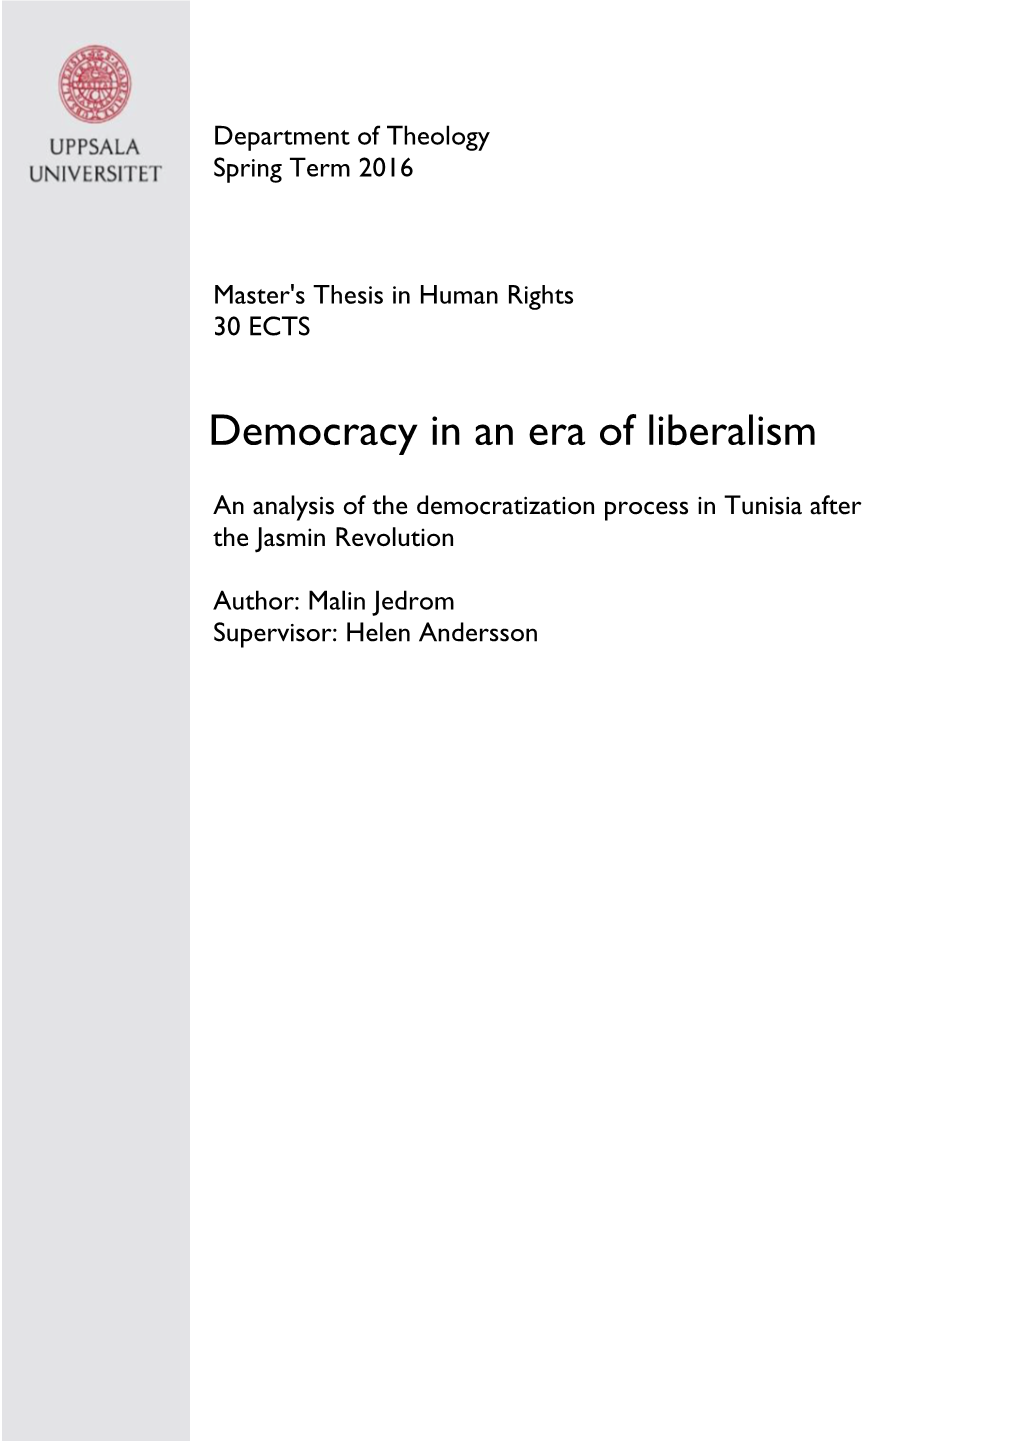 Democracy in an Era of Liberalism